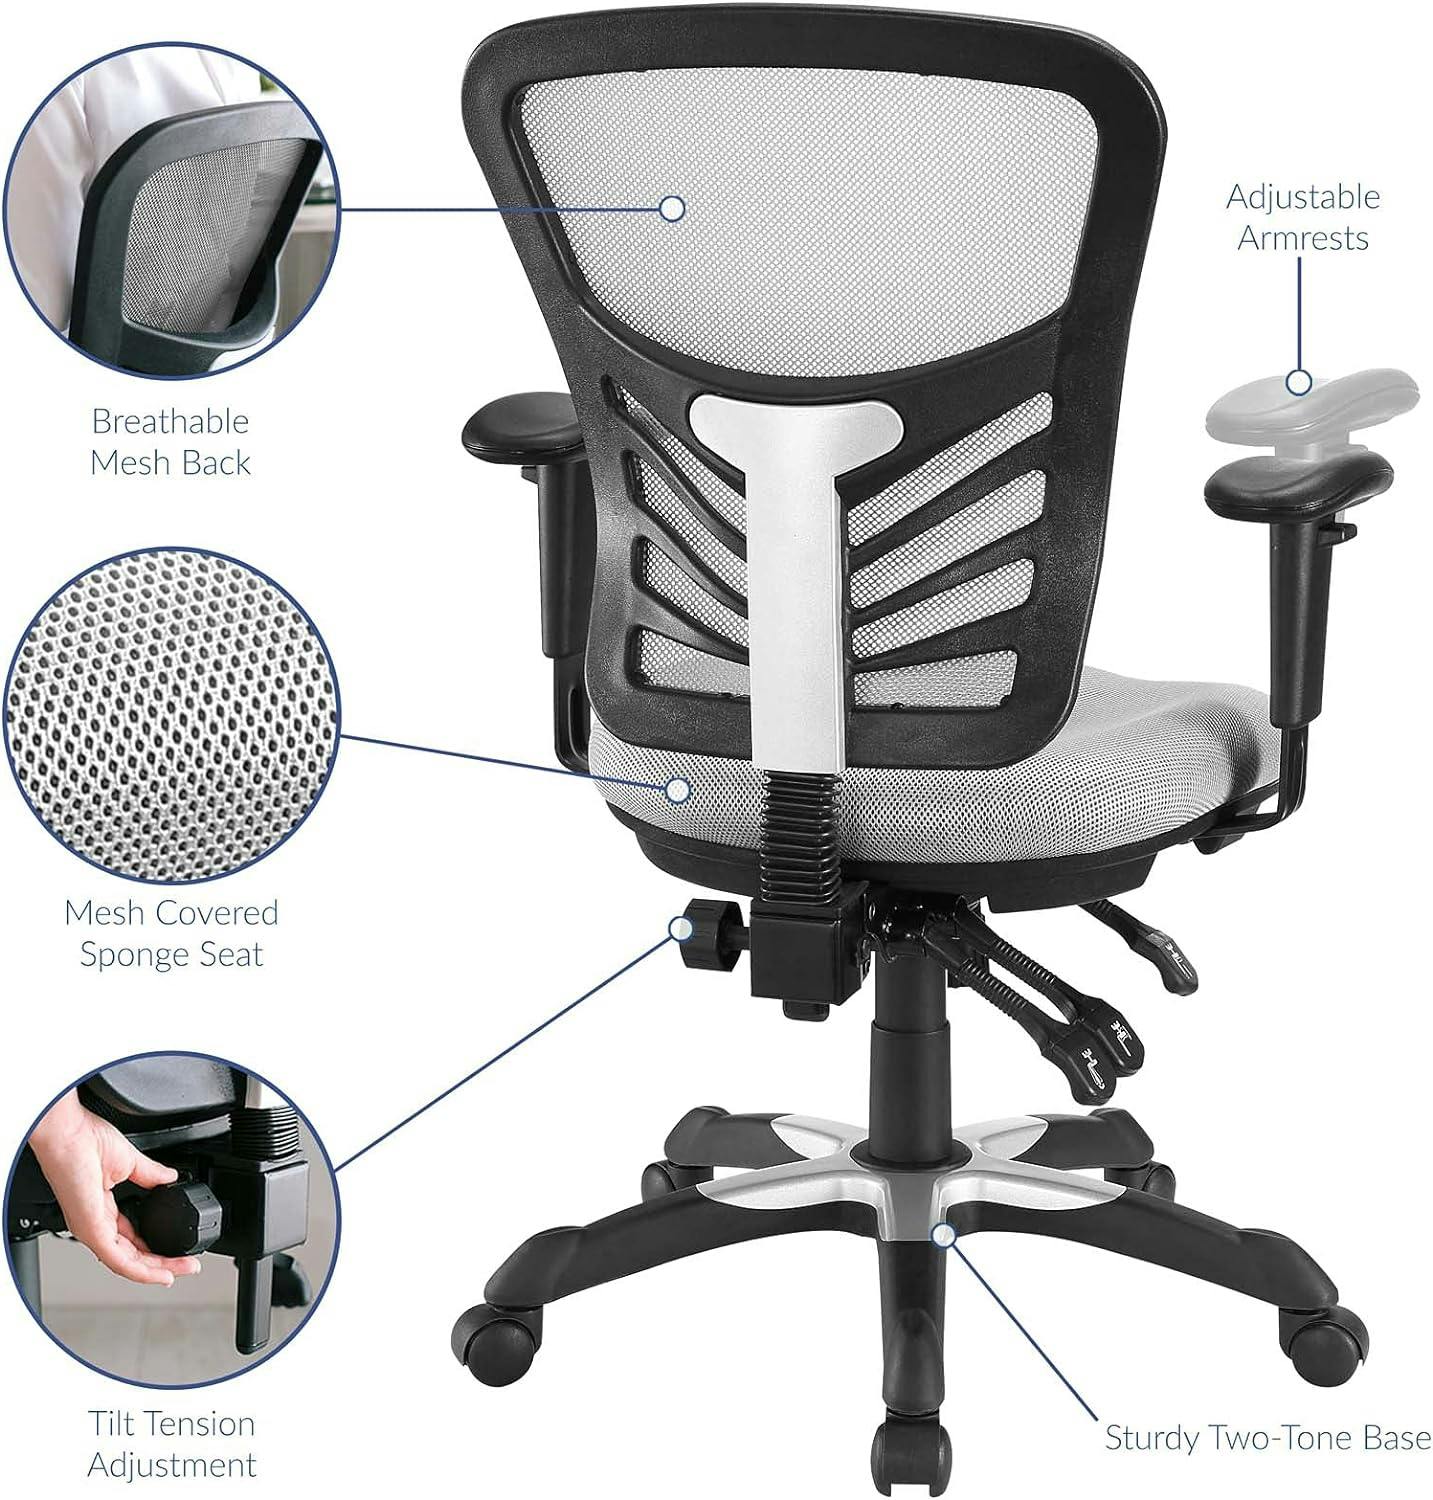 ErgoFlex Gray Mesh & Vinyl Adjustable Office Chair with Swivel